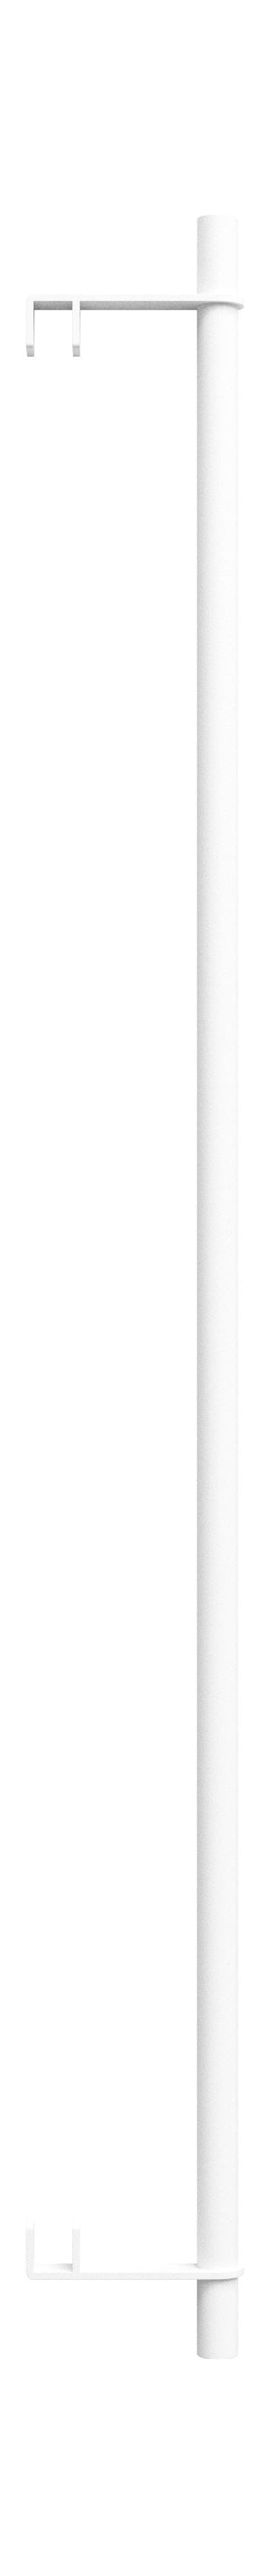 Moebe Regalsystem/Wandregalkleidung Bar 85 cm, weiß